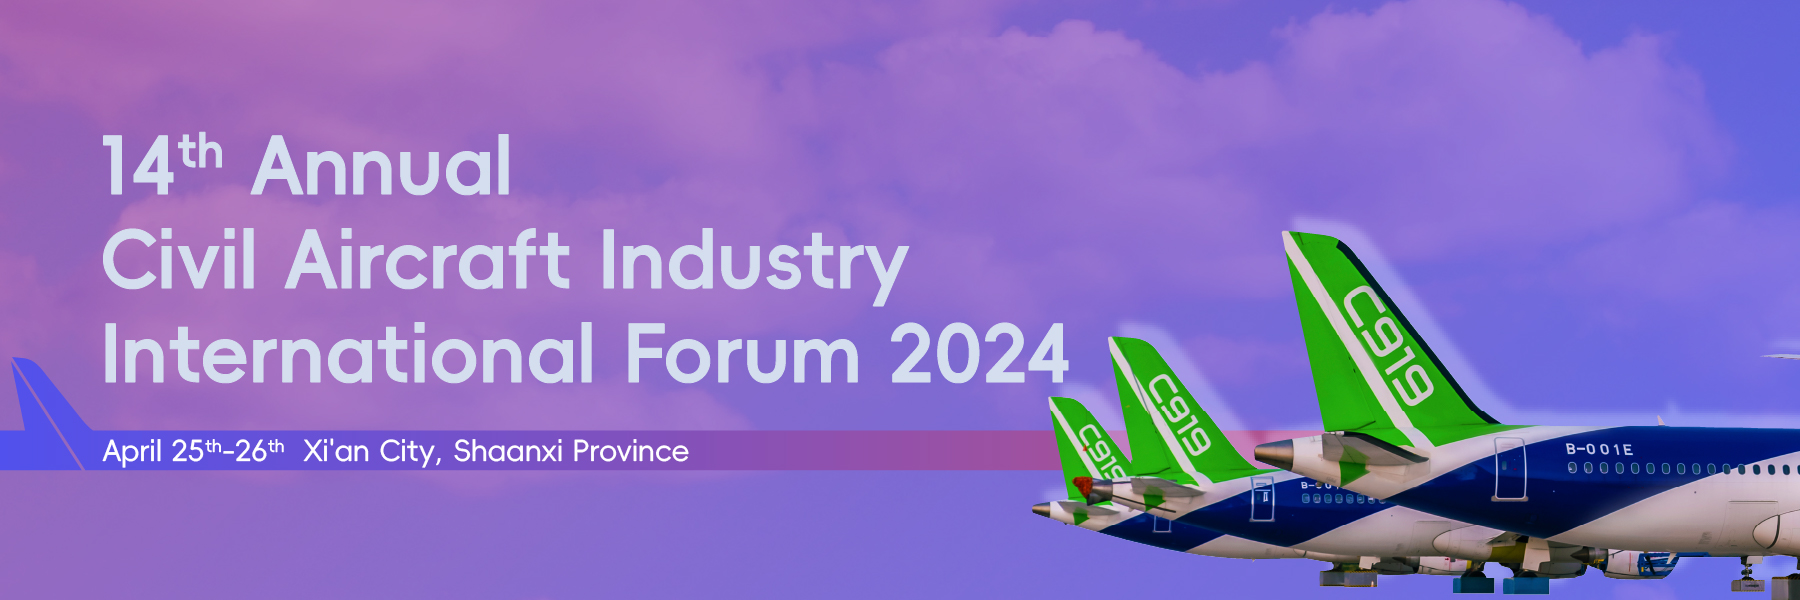 14th Annual Civil Aircraft Industry International Forum 2024